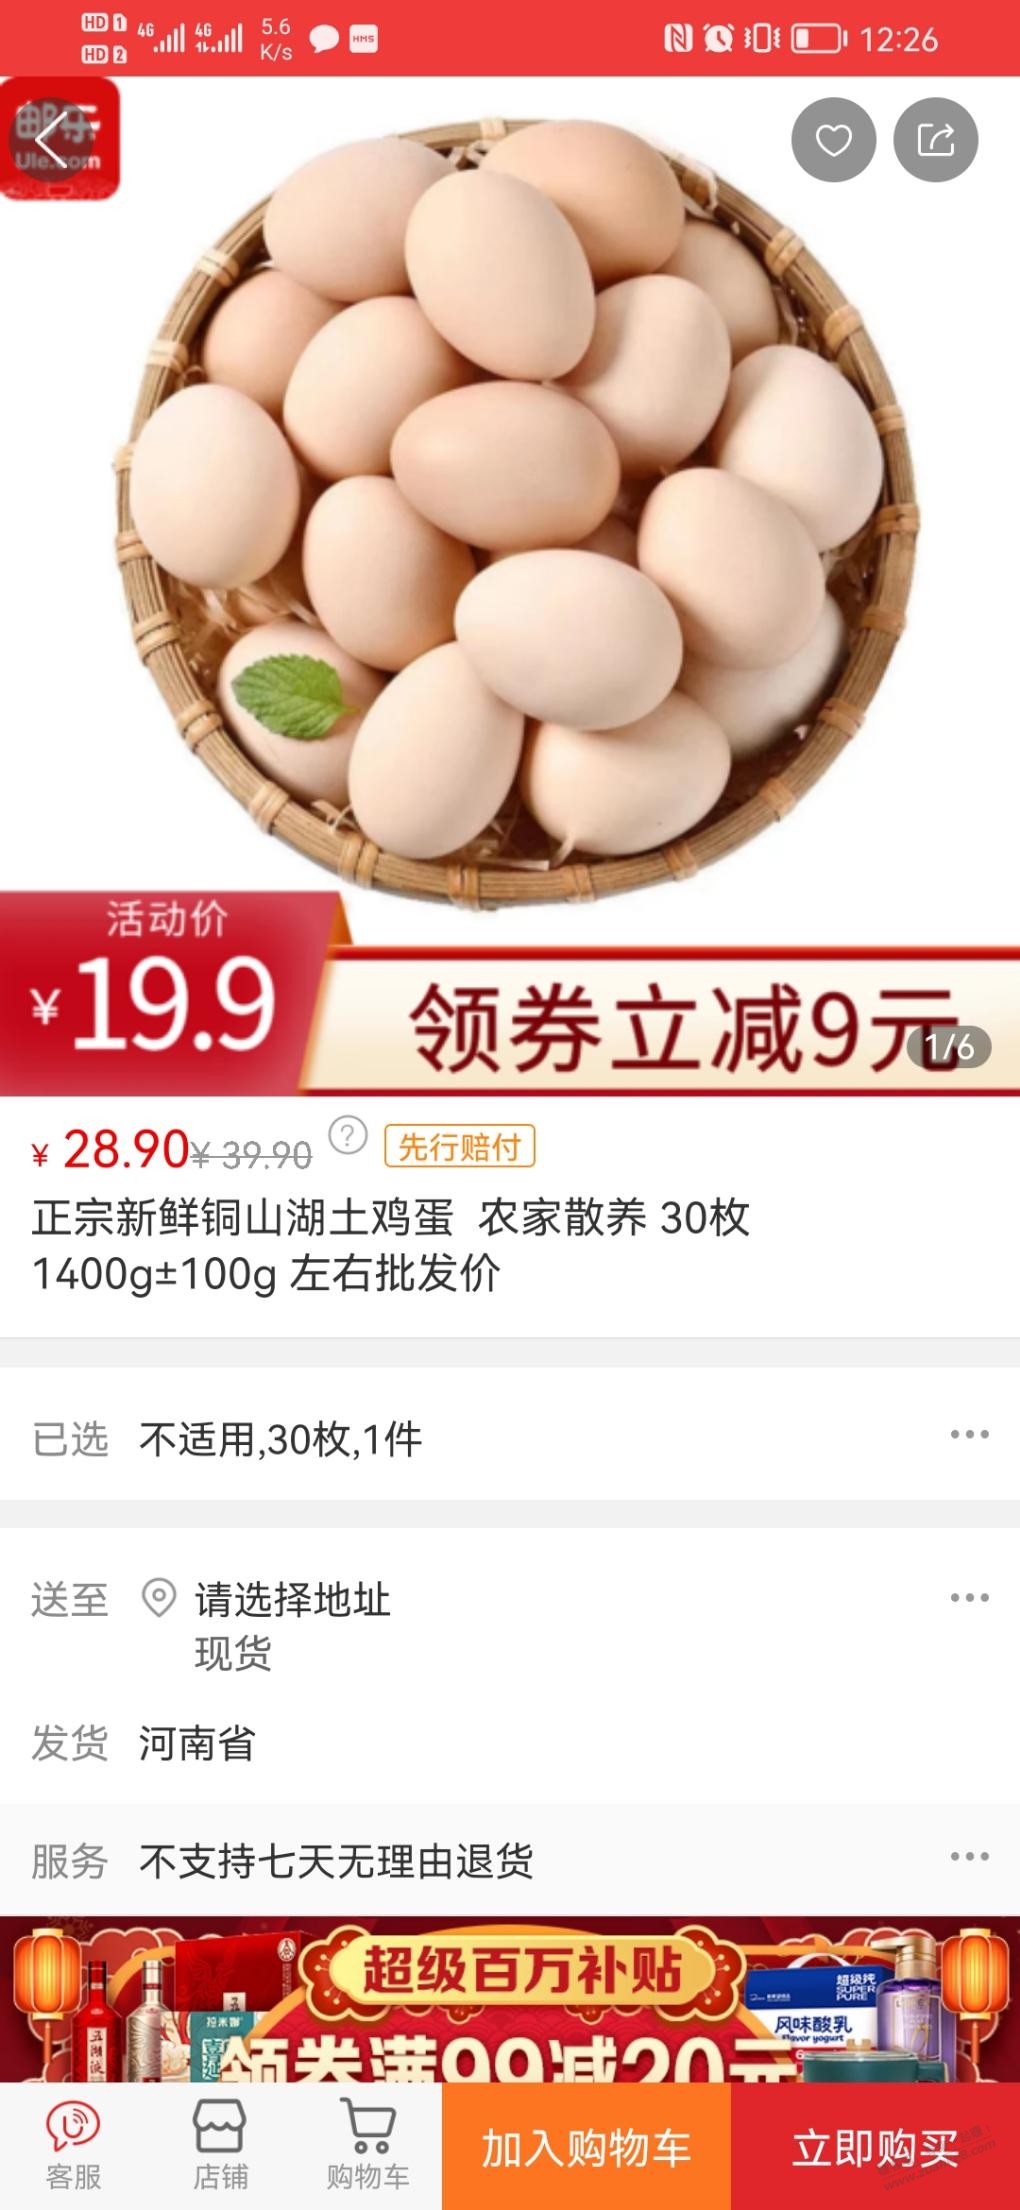 yl没有9.9的鸡蛋了-惠小助(52huixz.com)